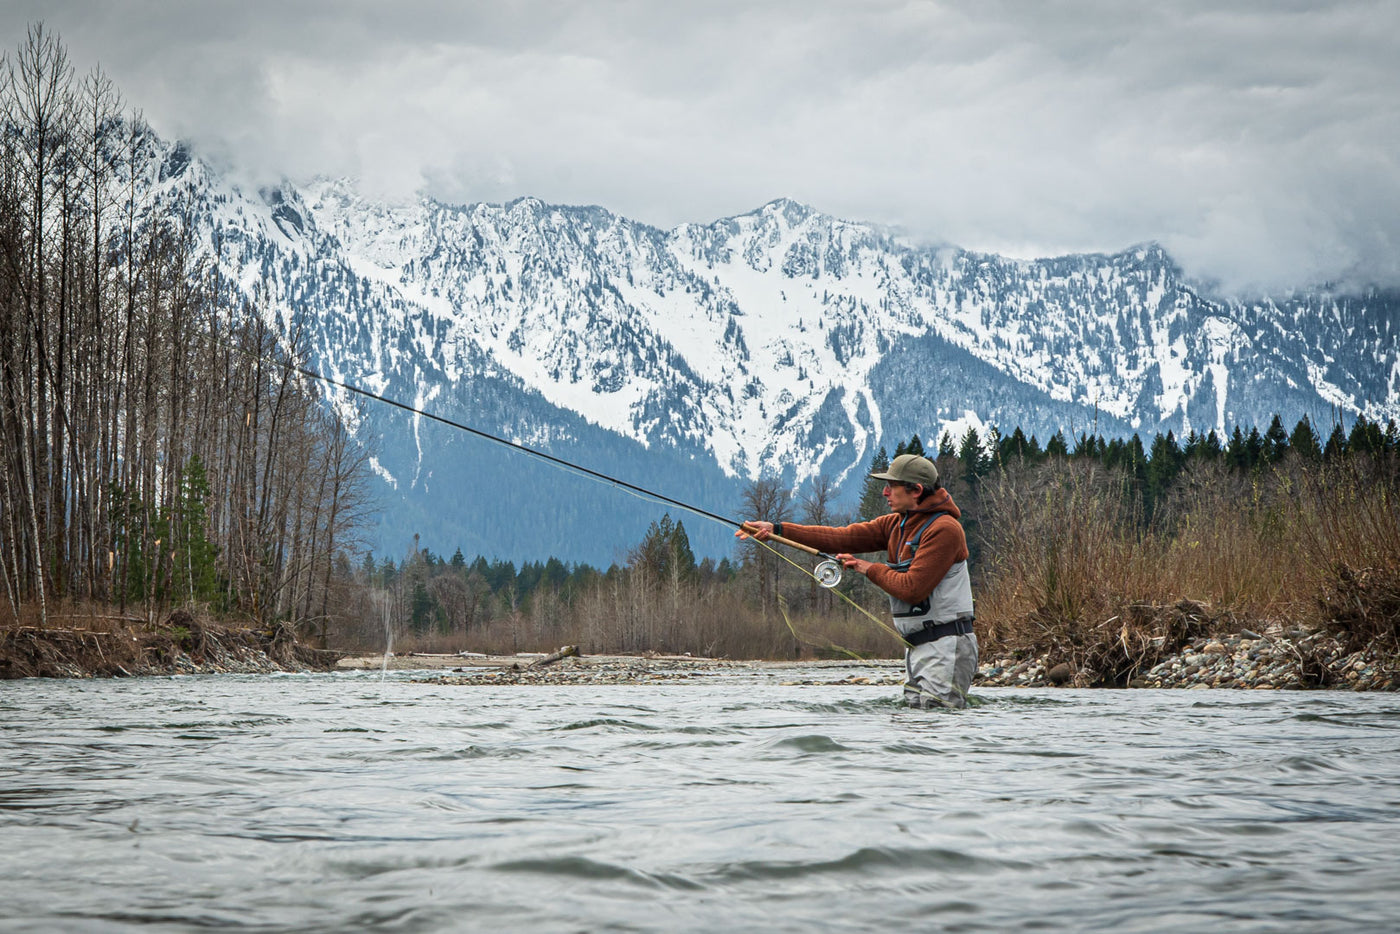 Sauk River Fly Fishing For Salmon, Steelhead Fly Gyde